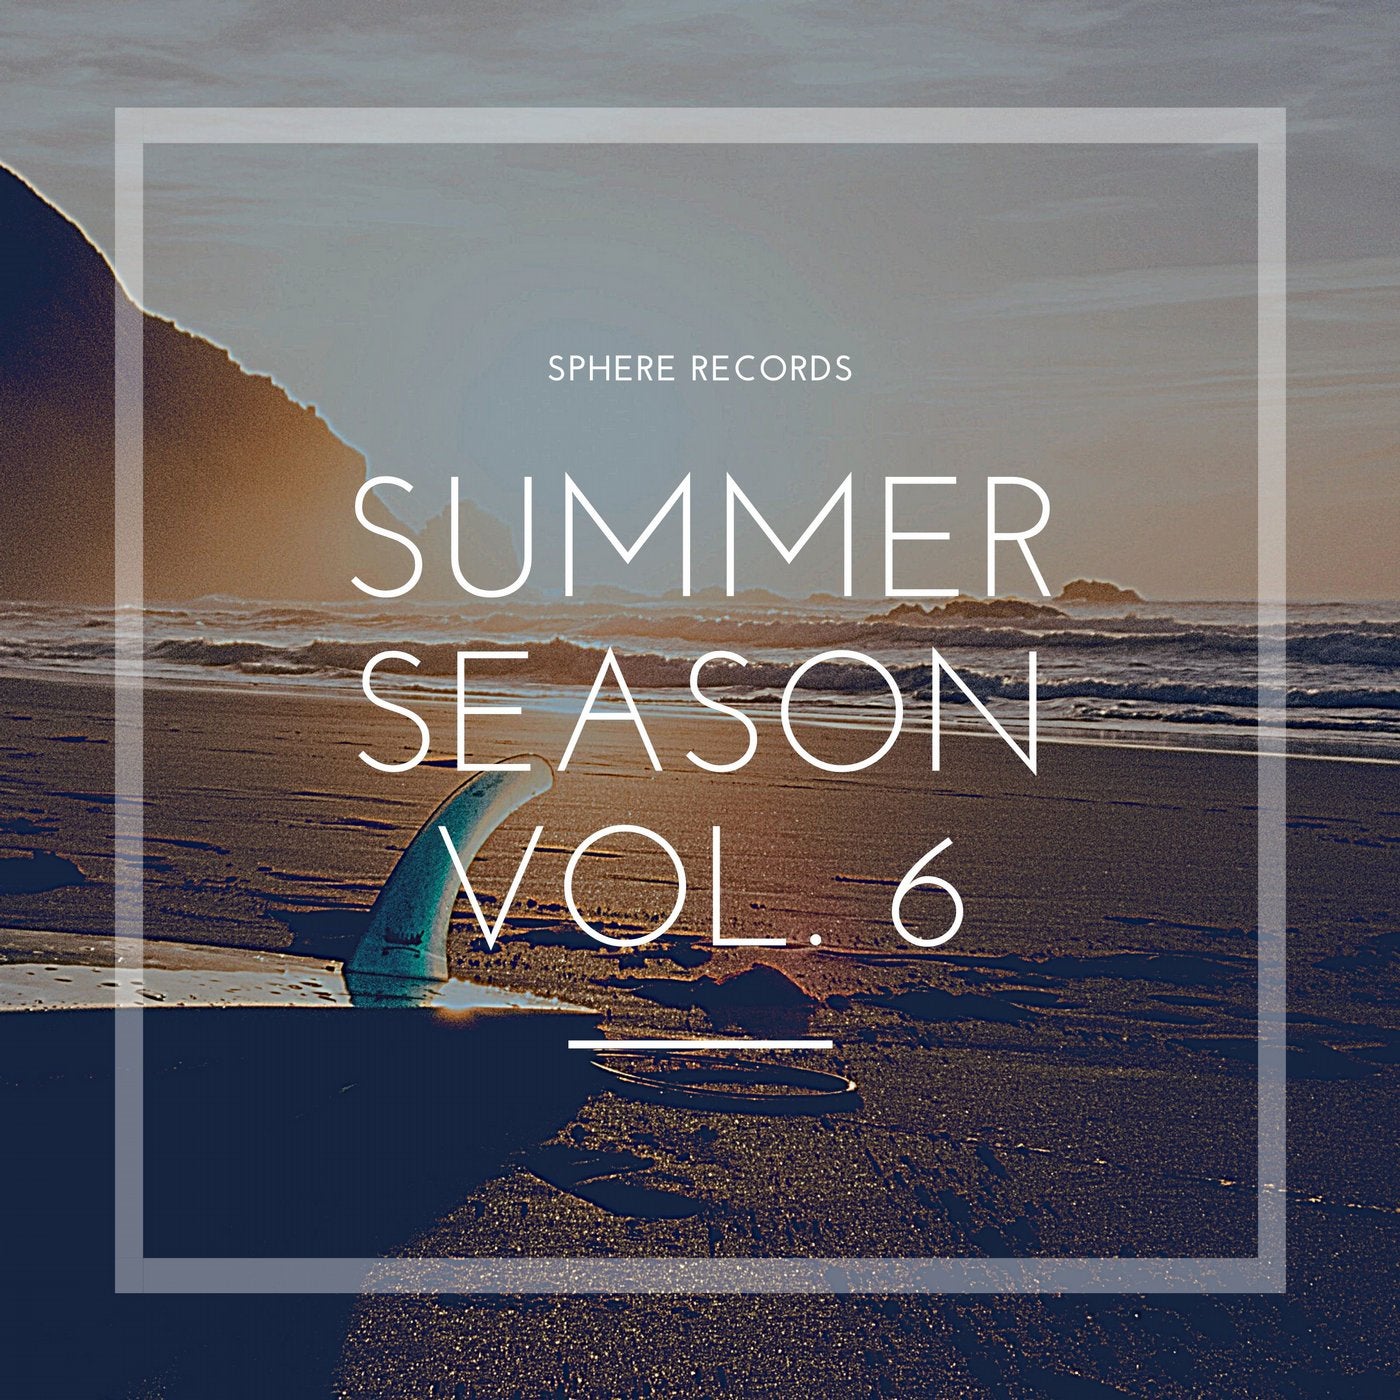 Summer Season Vol. 6